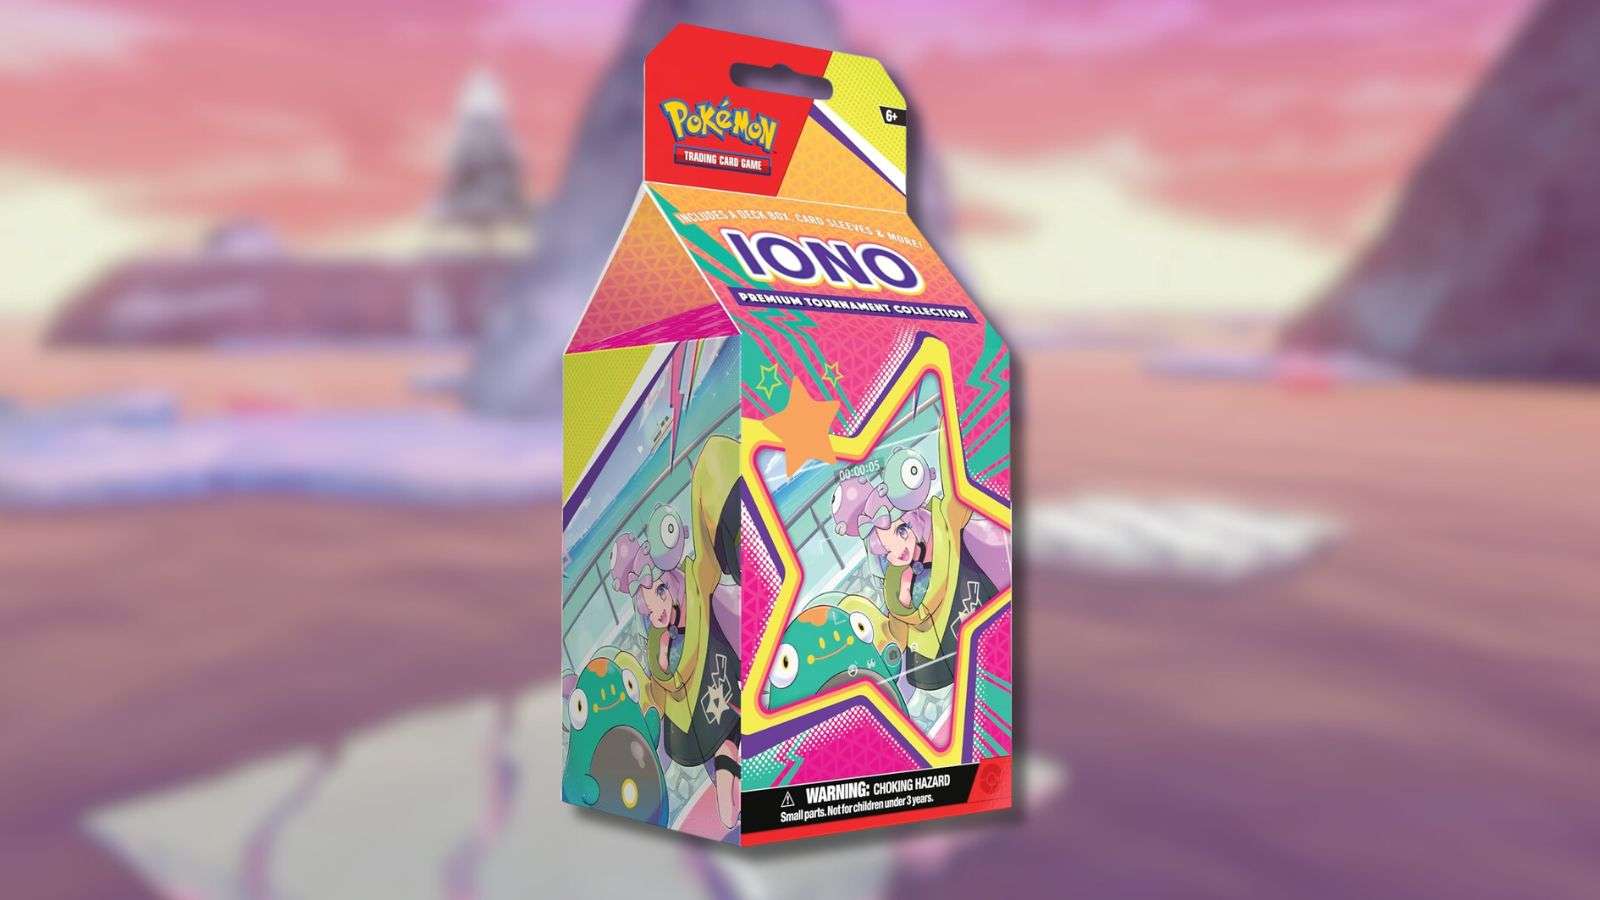 Iono PTC Pokemon card product photo with beach background.